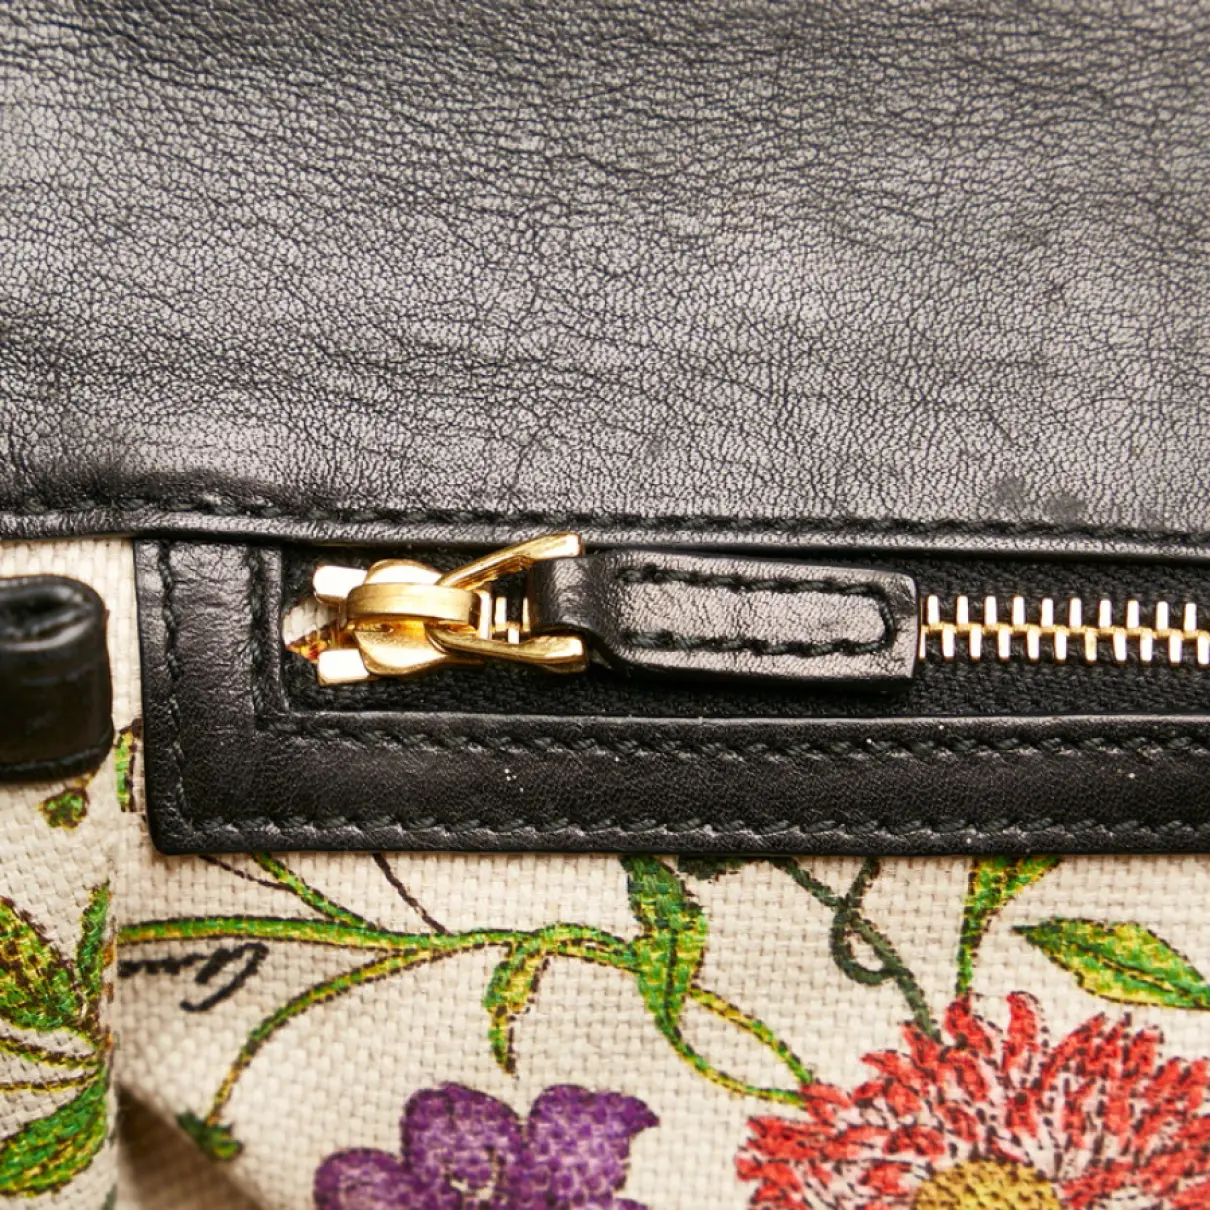 Bamboo leather handbag Gucci